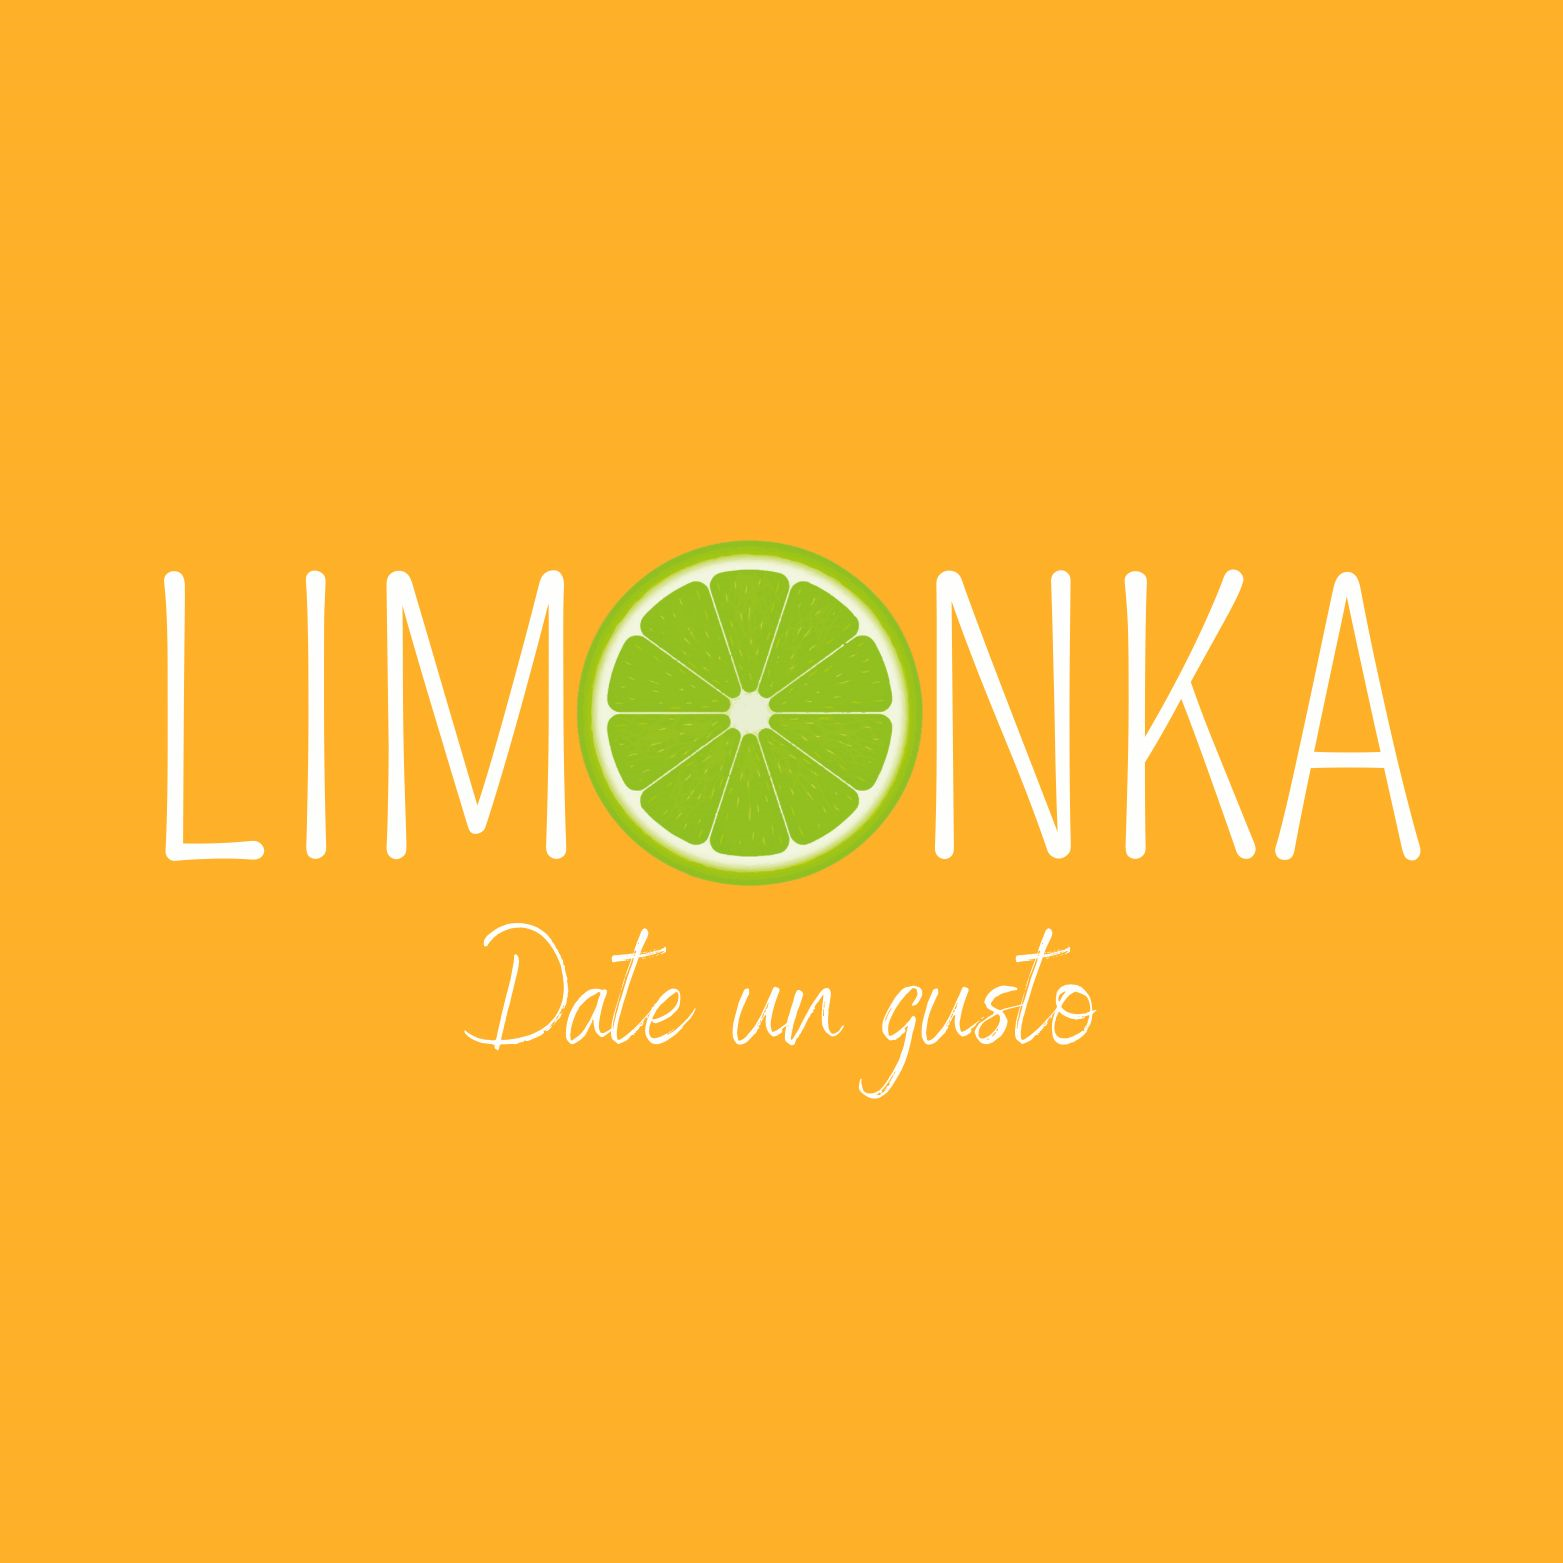 Limonka